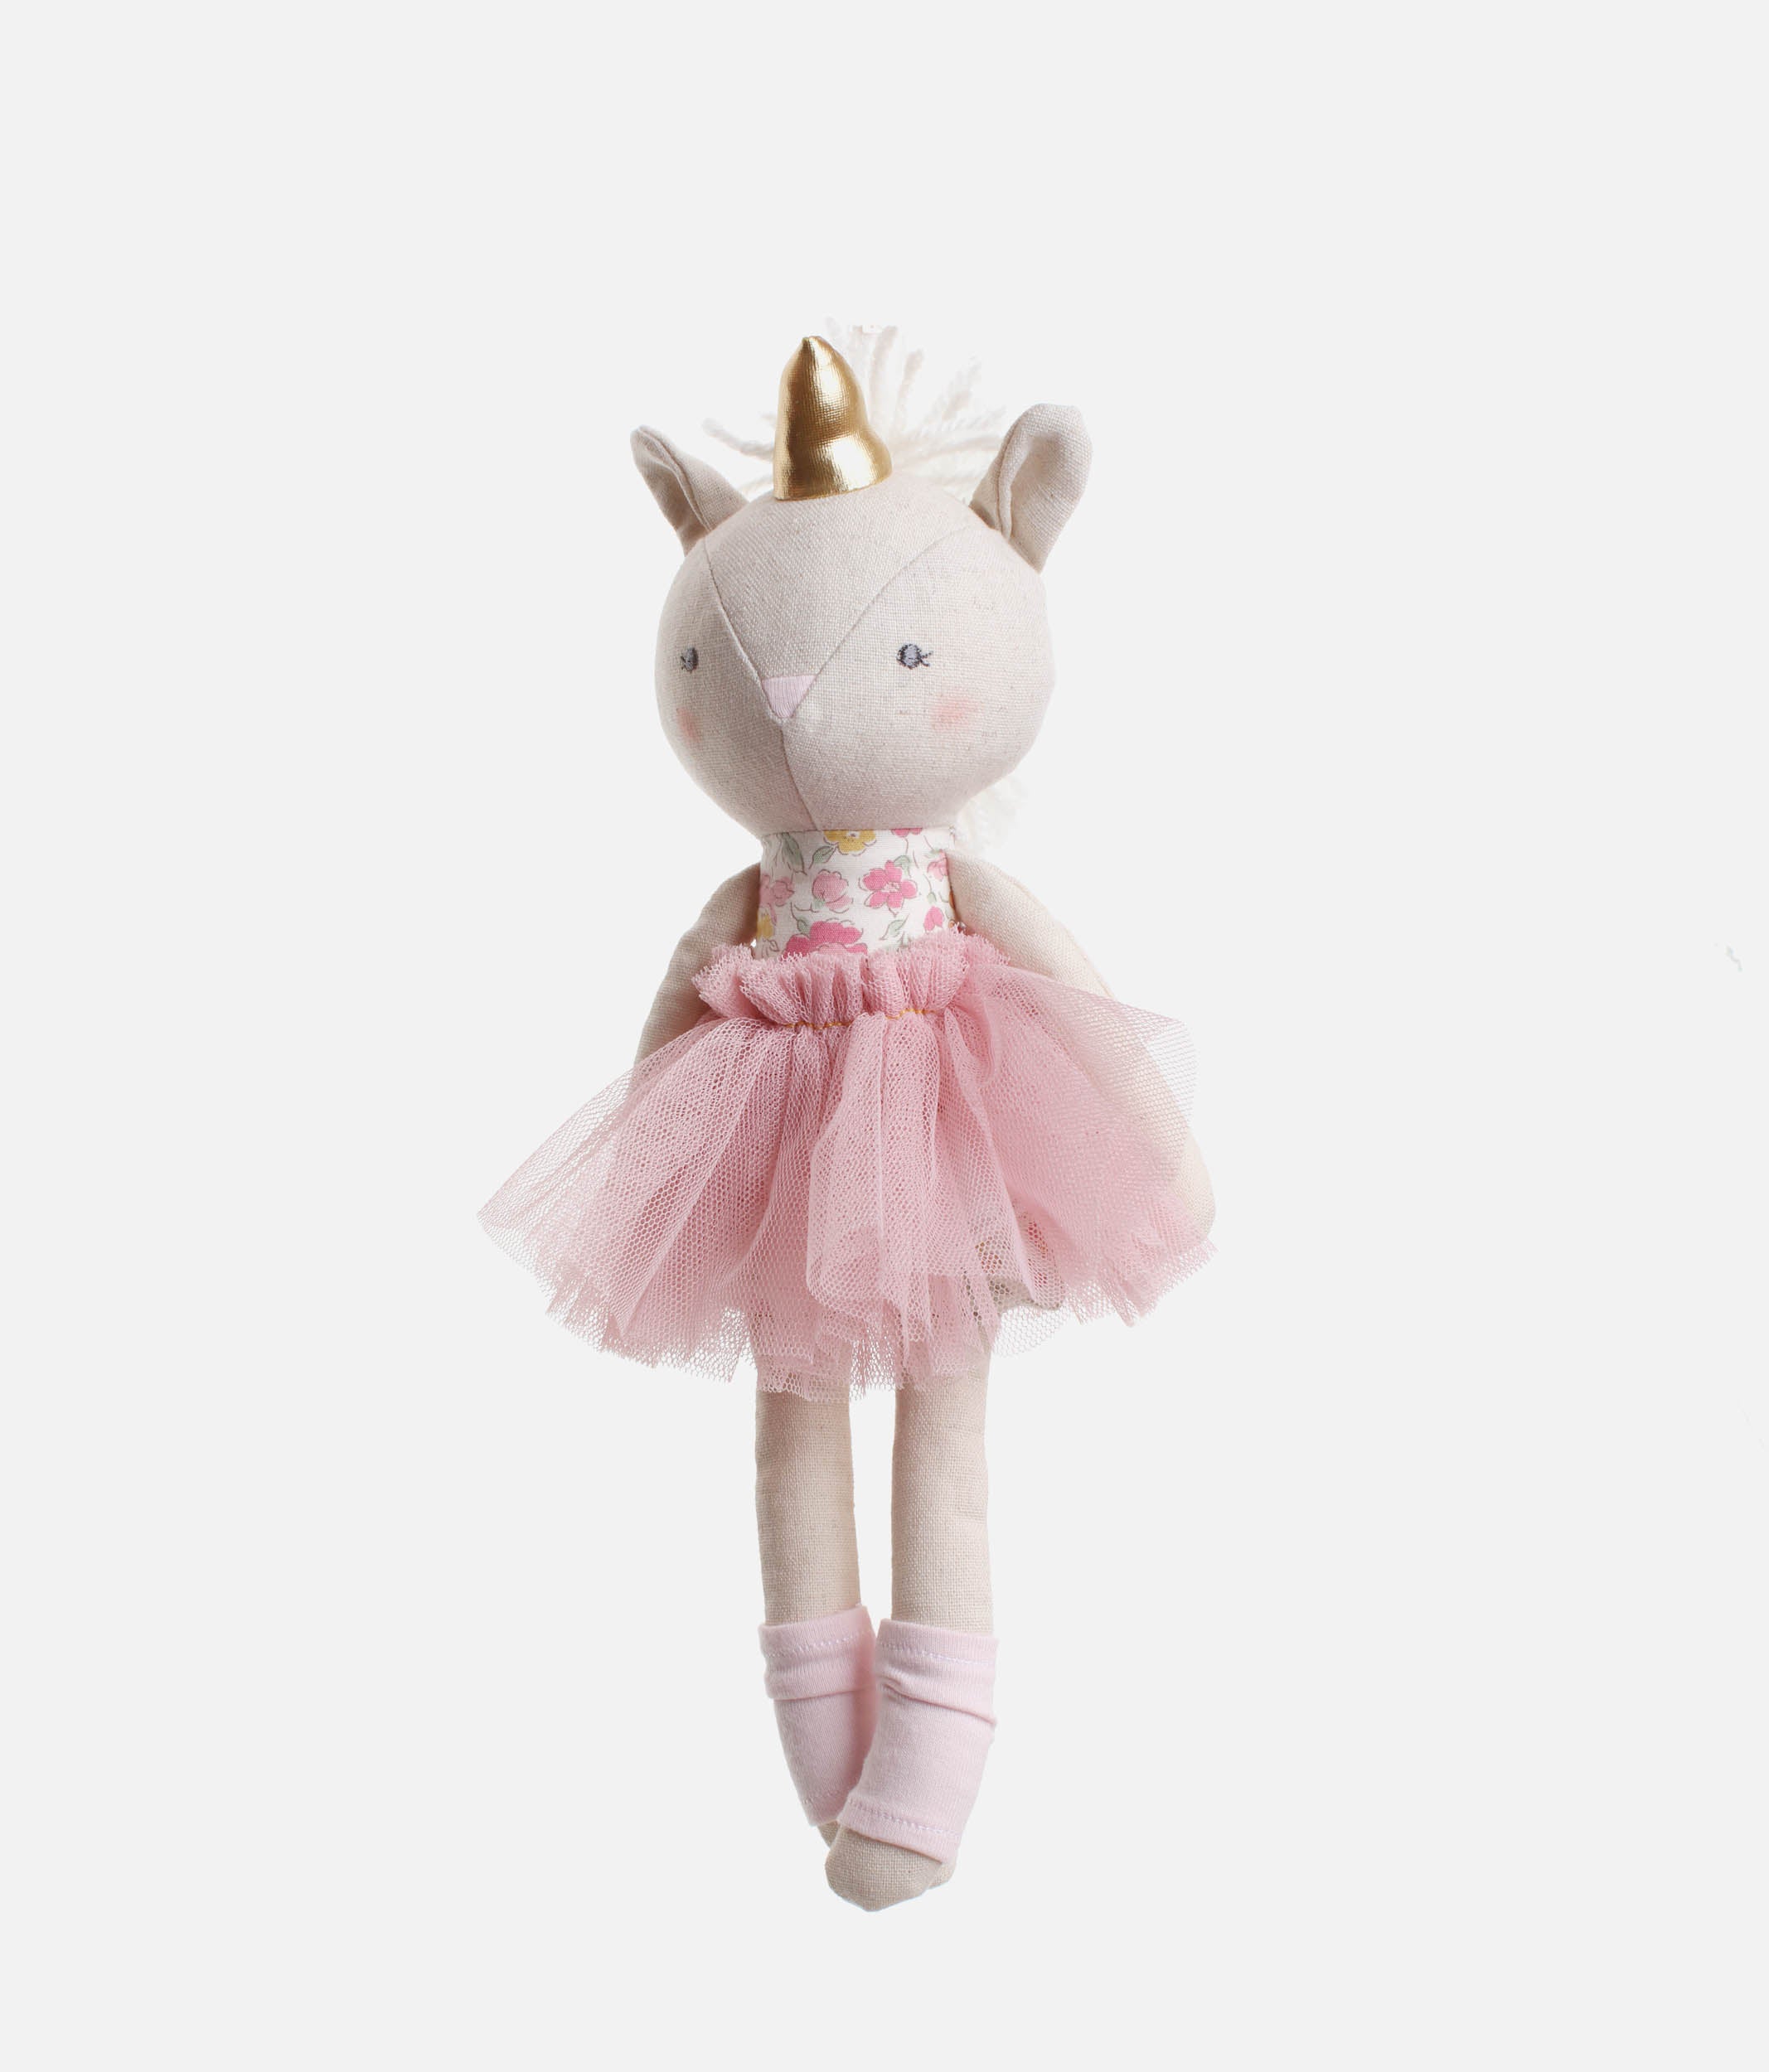 Rose Garden Baby Unicorn Doll - N11525RG